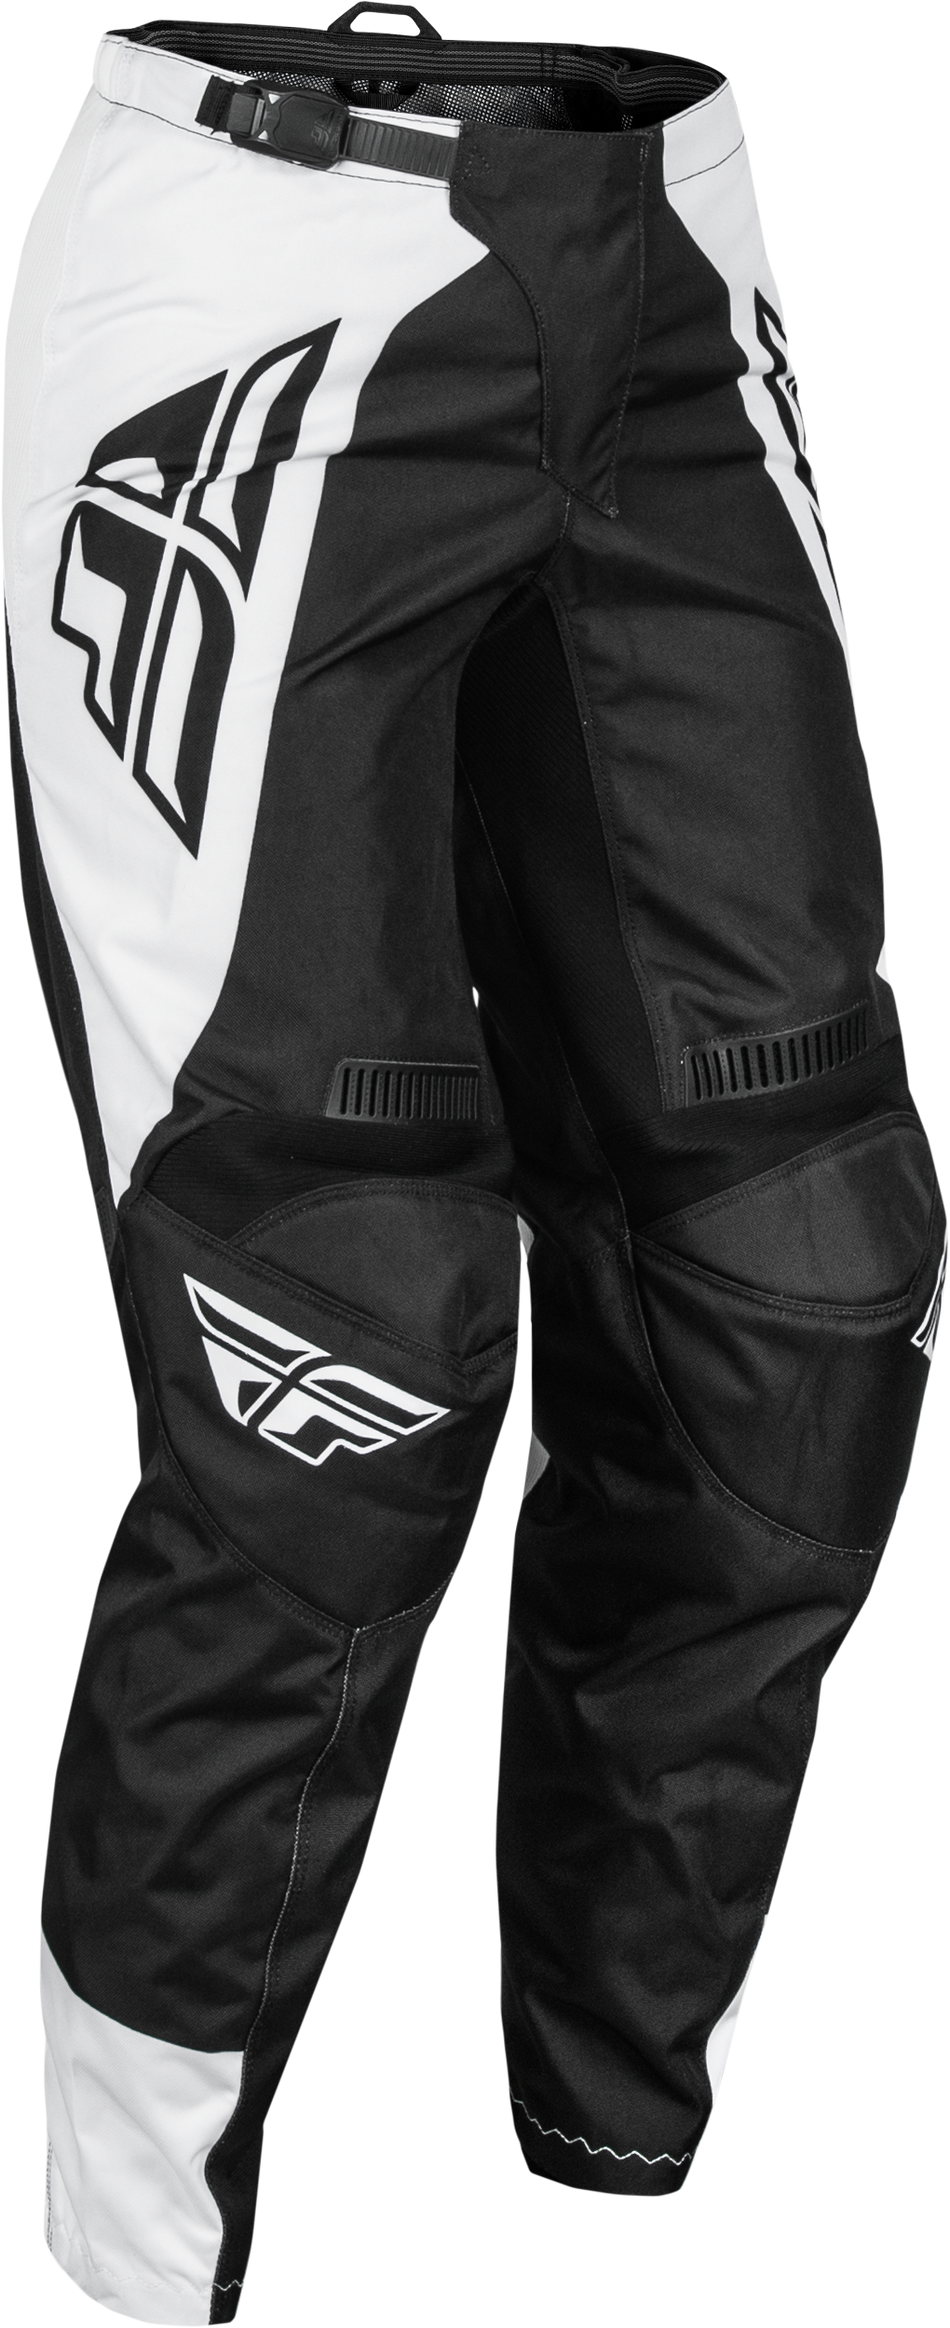 FLY RACING Women's F-16 Pants Black/White Sz 0/02 377-83200